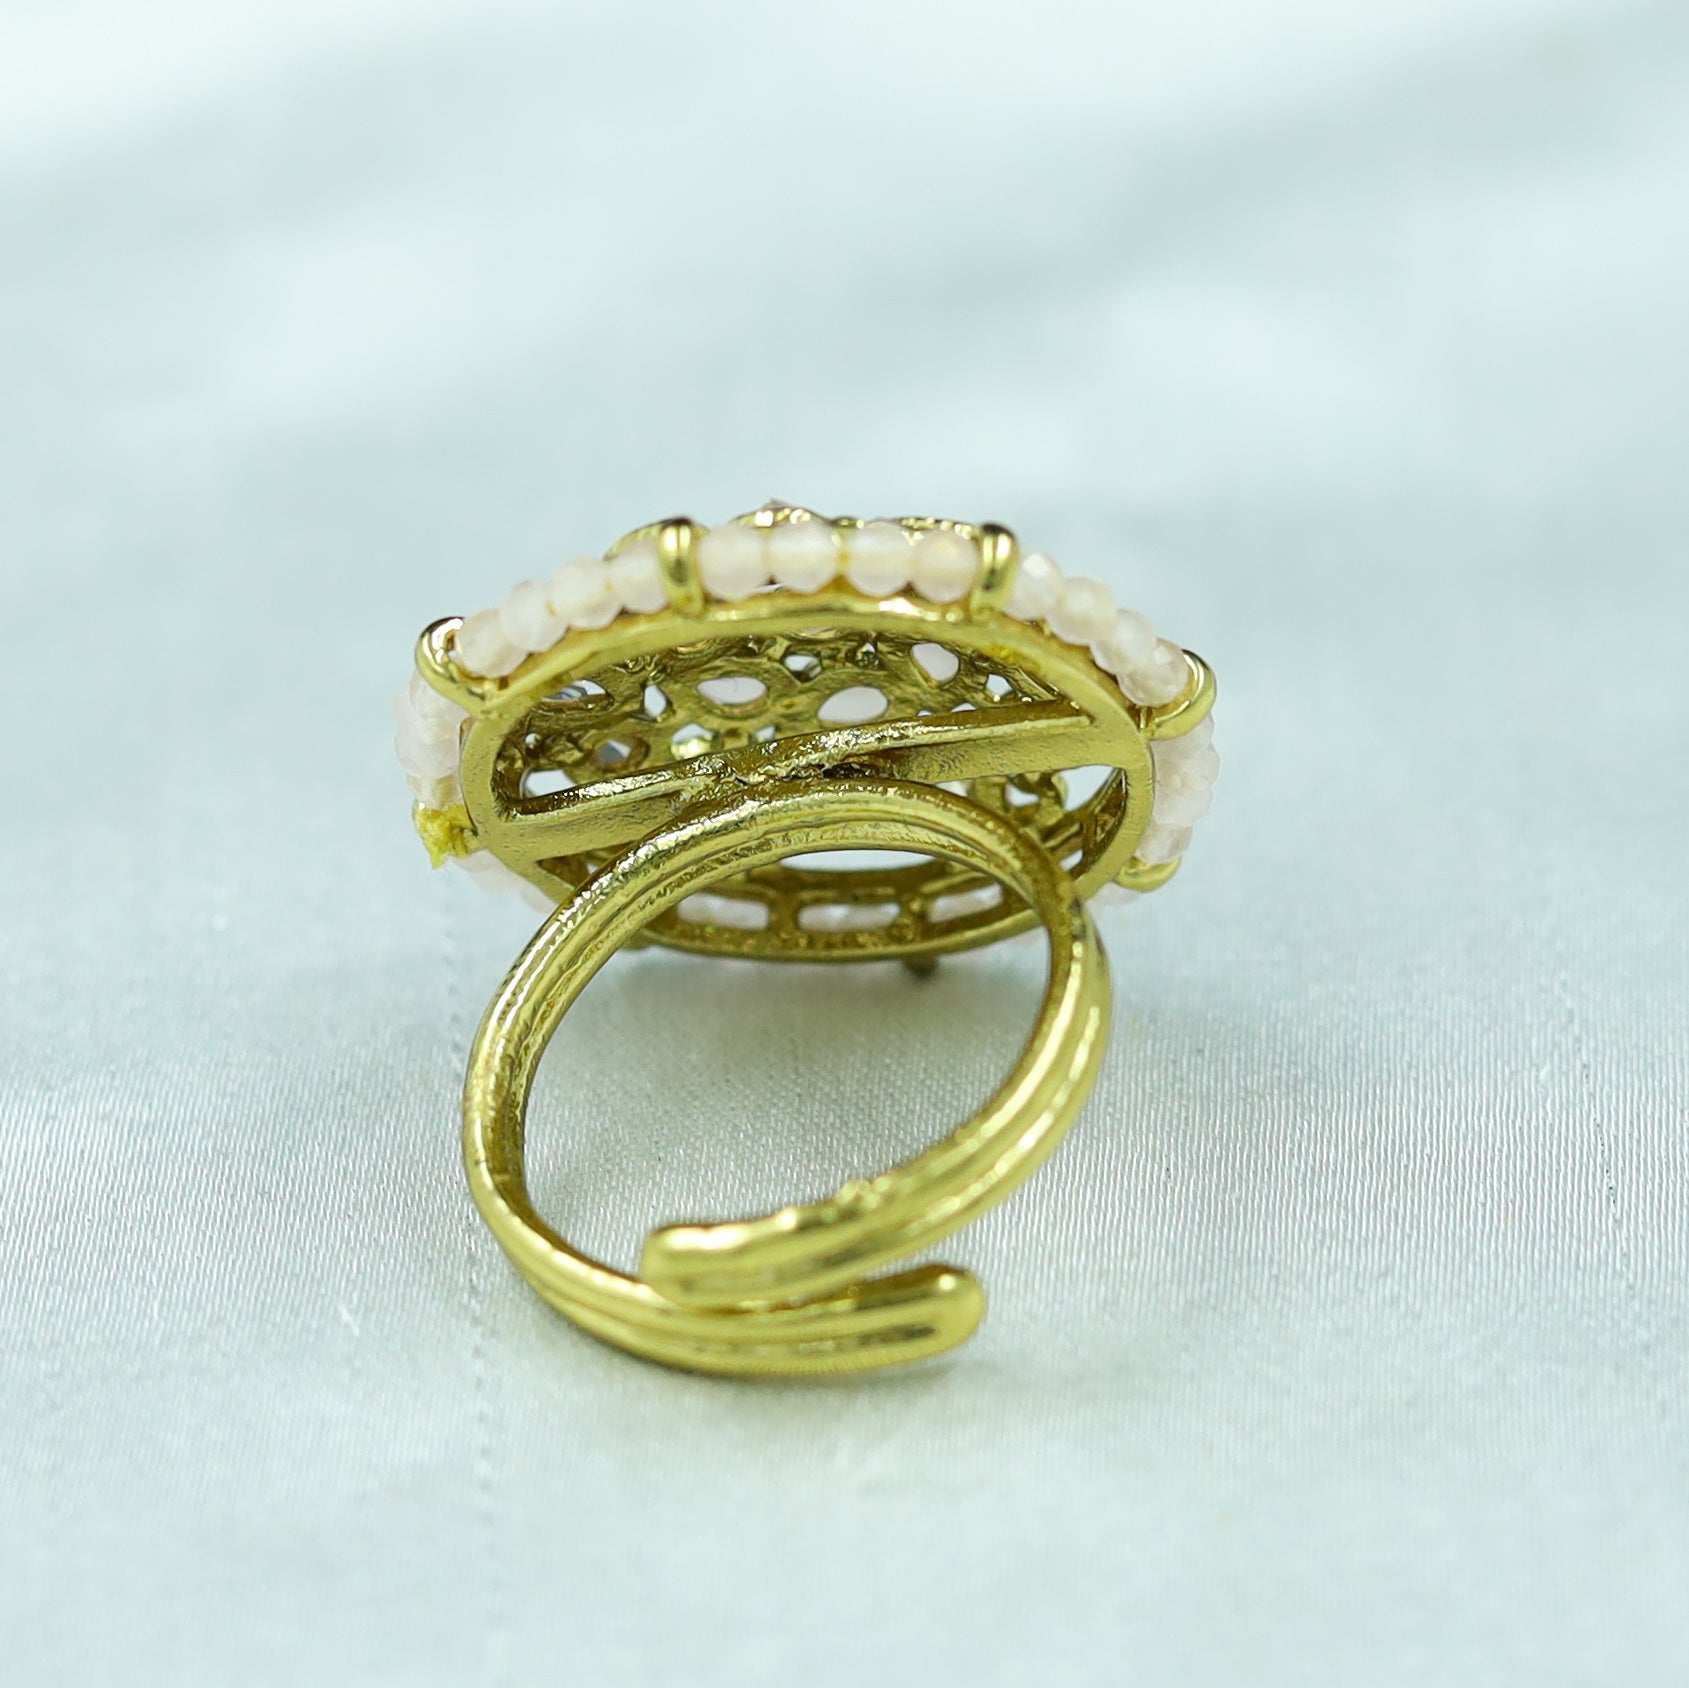 Antique Gold Finish Ring 4002-28